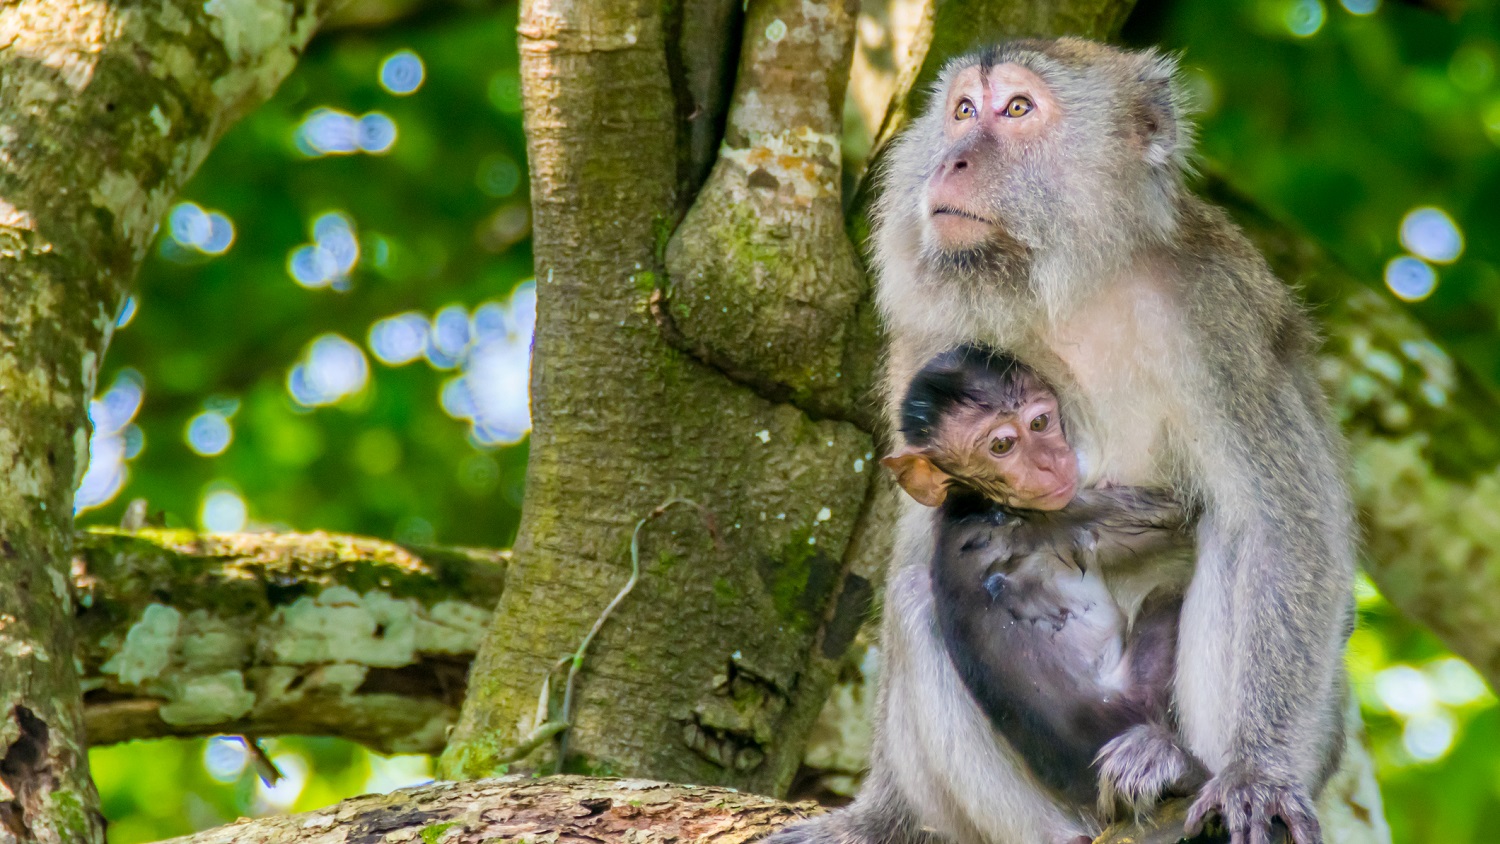 Macaque monkey with baby: Photo 66976064 © Asang Hurai | Dreamstime.com